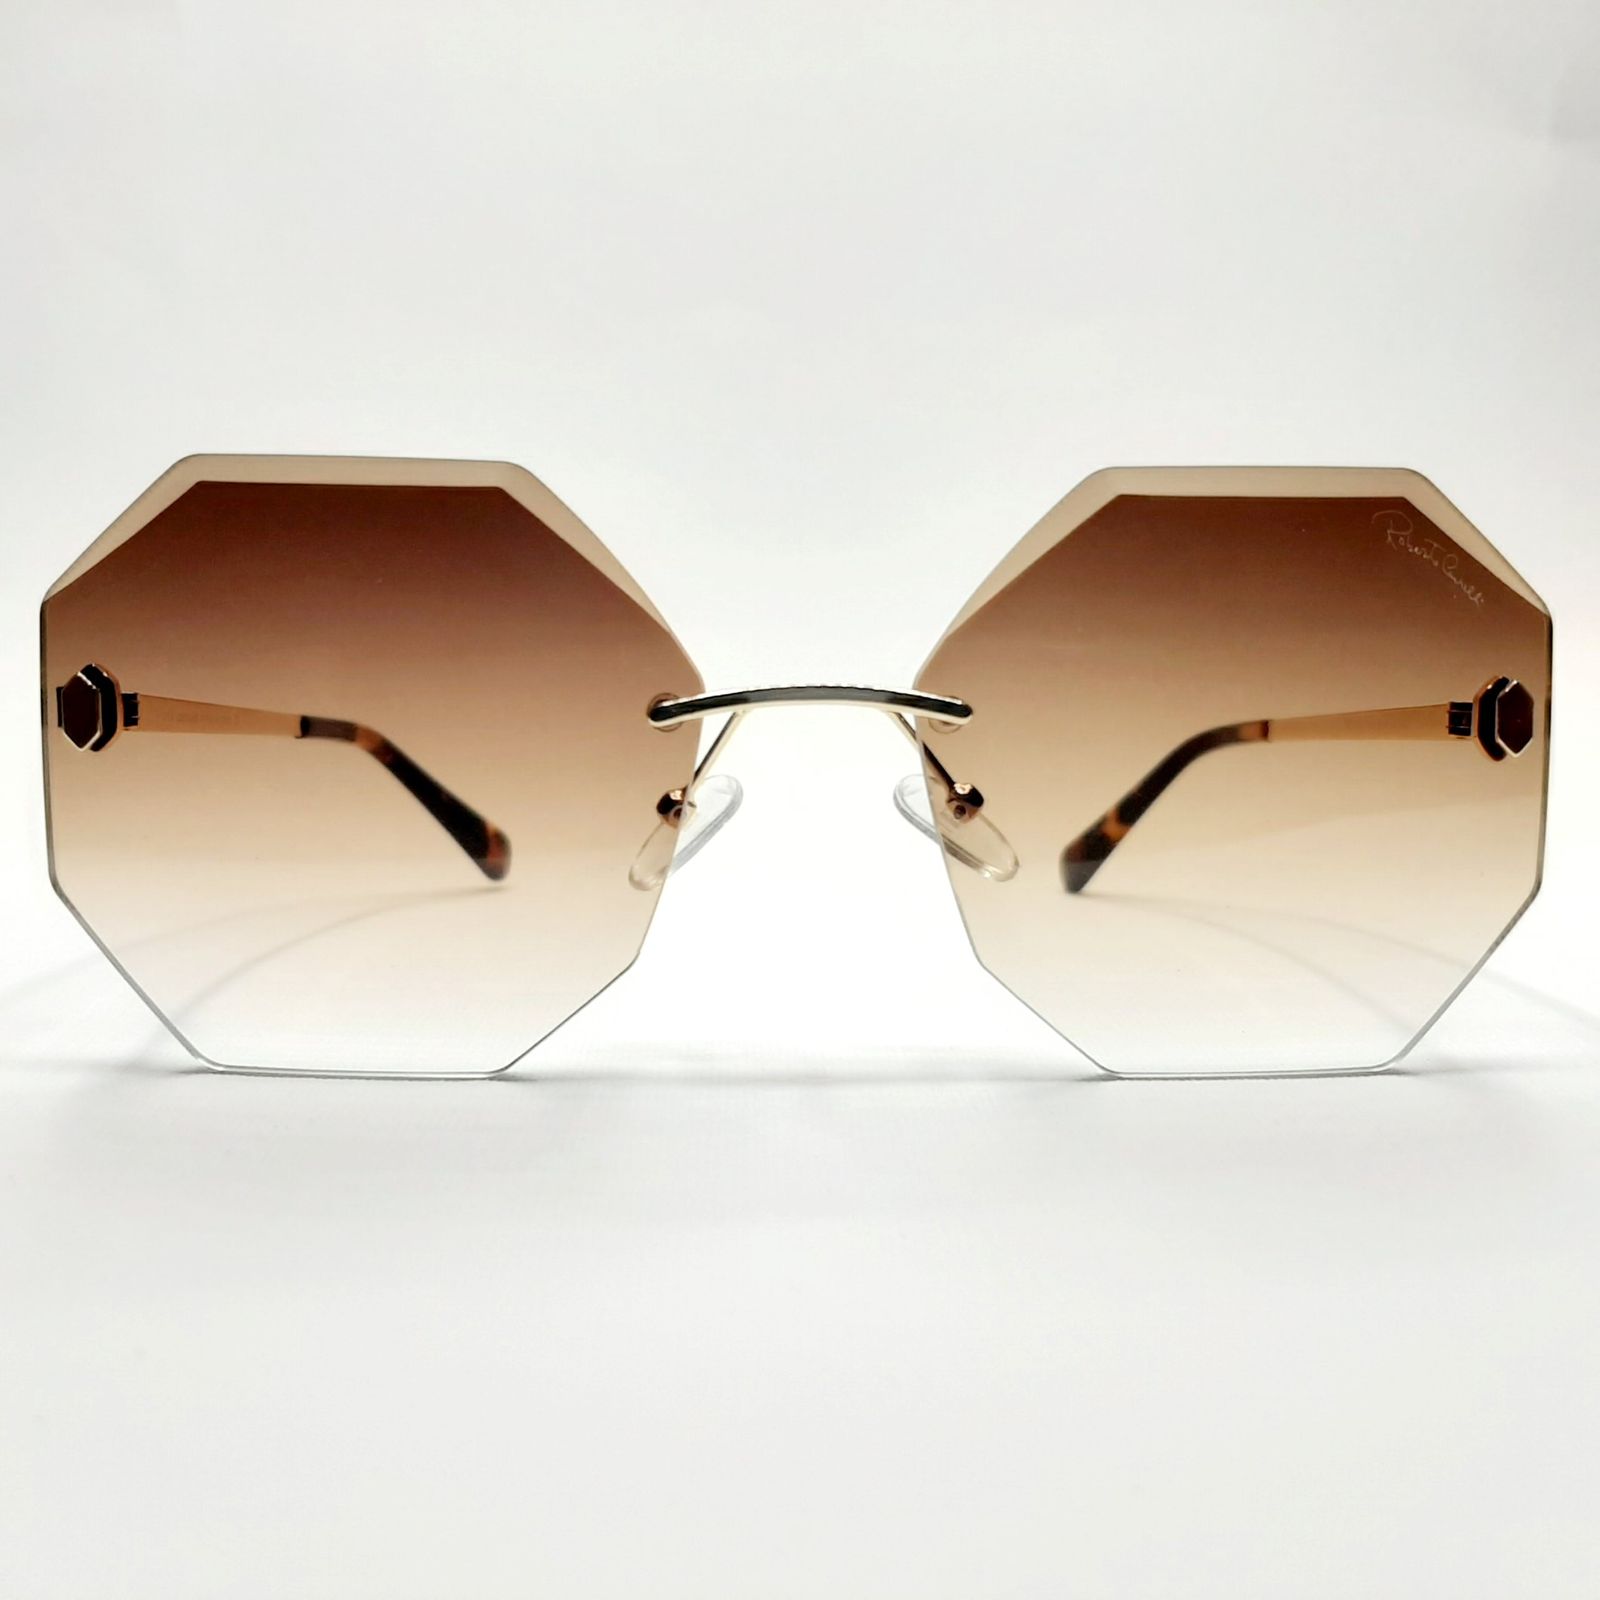 عینک آفتابی روبرتو کاوالی مدل RC113133v -  - 2